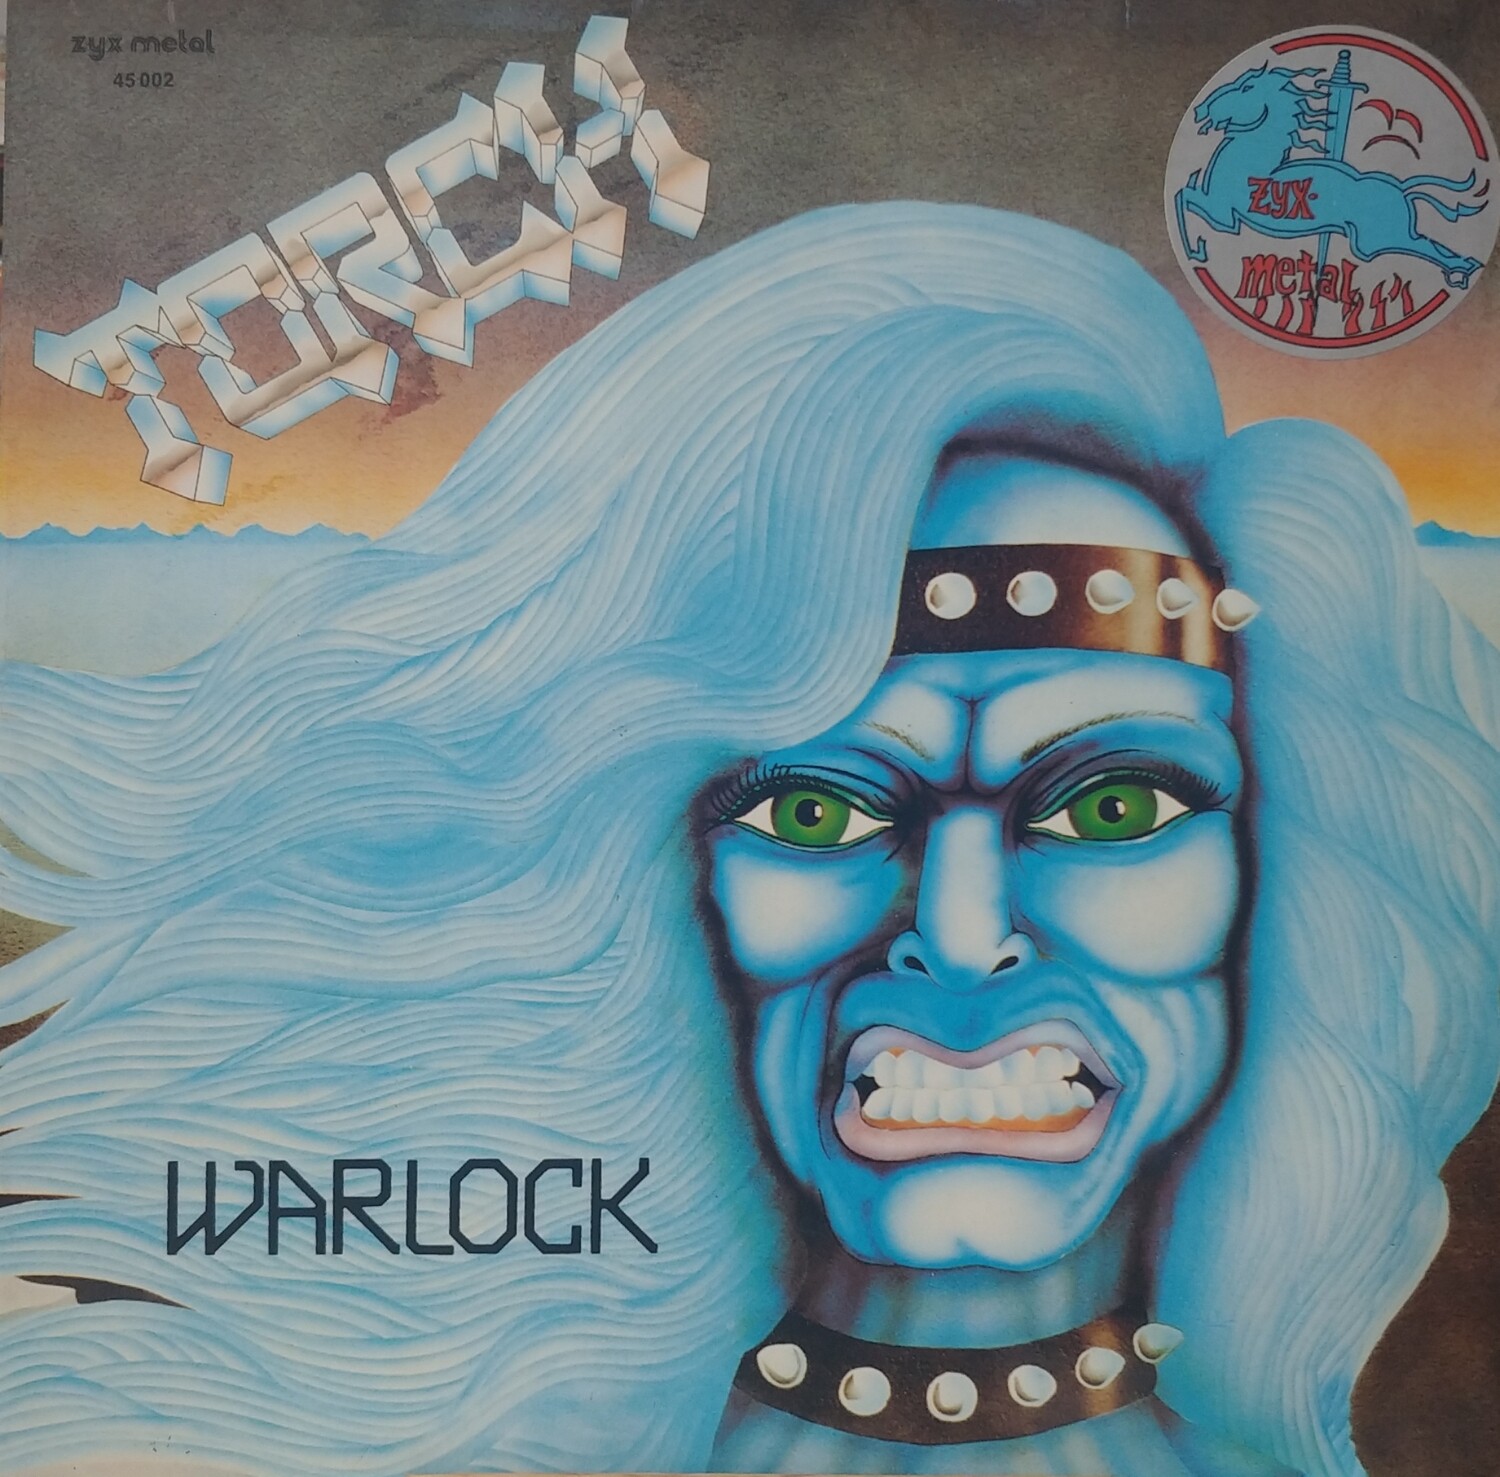 Warlock - Torch